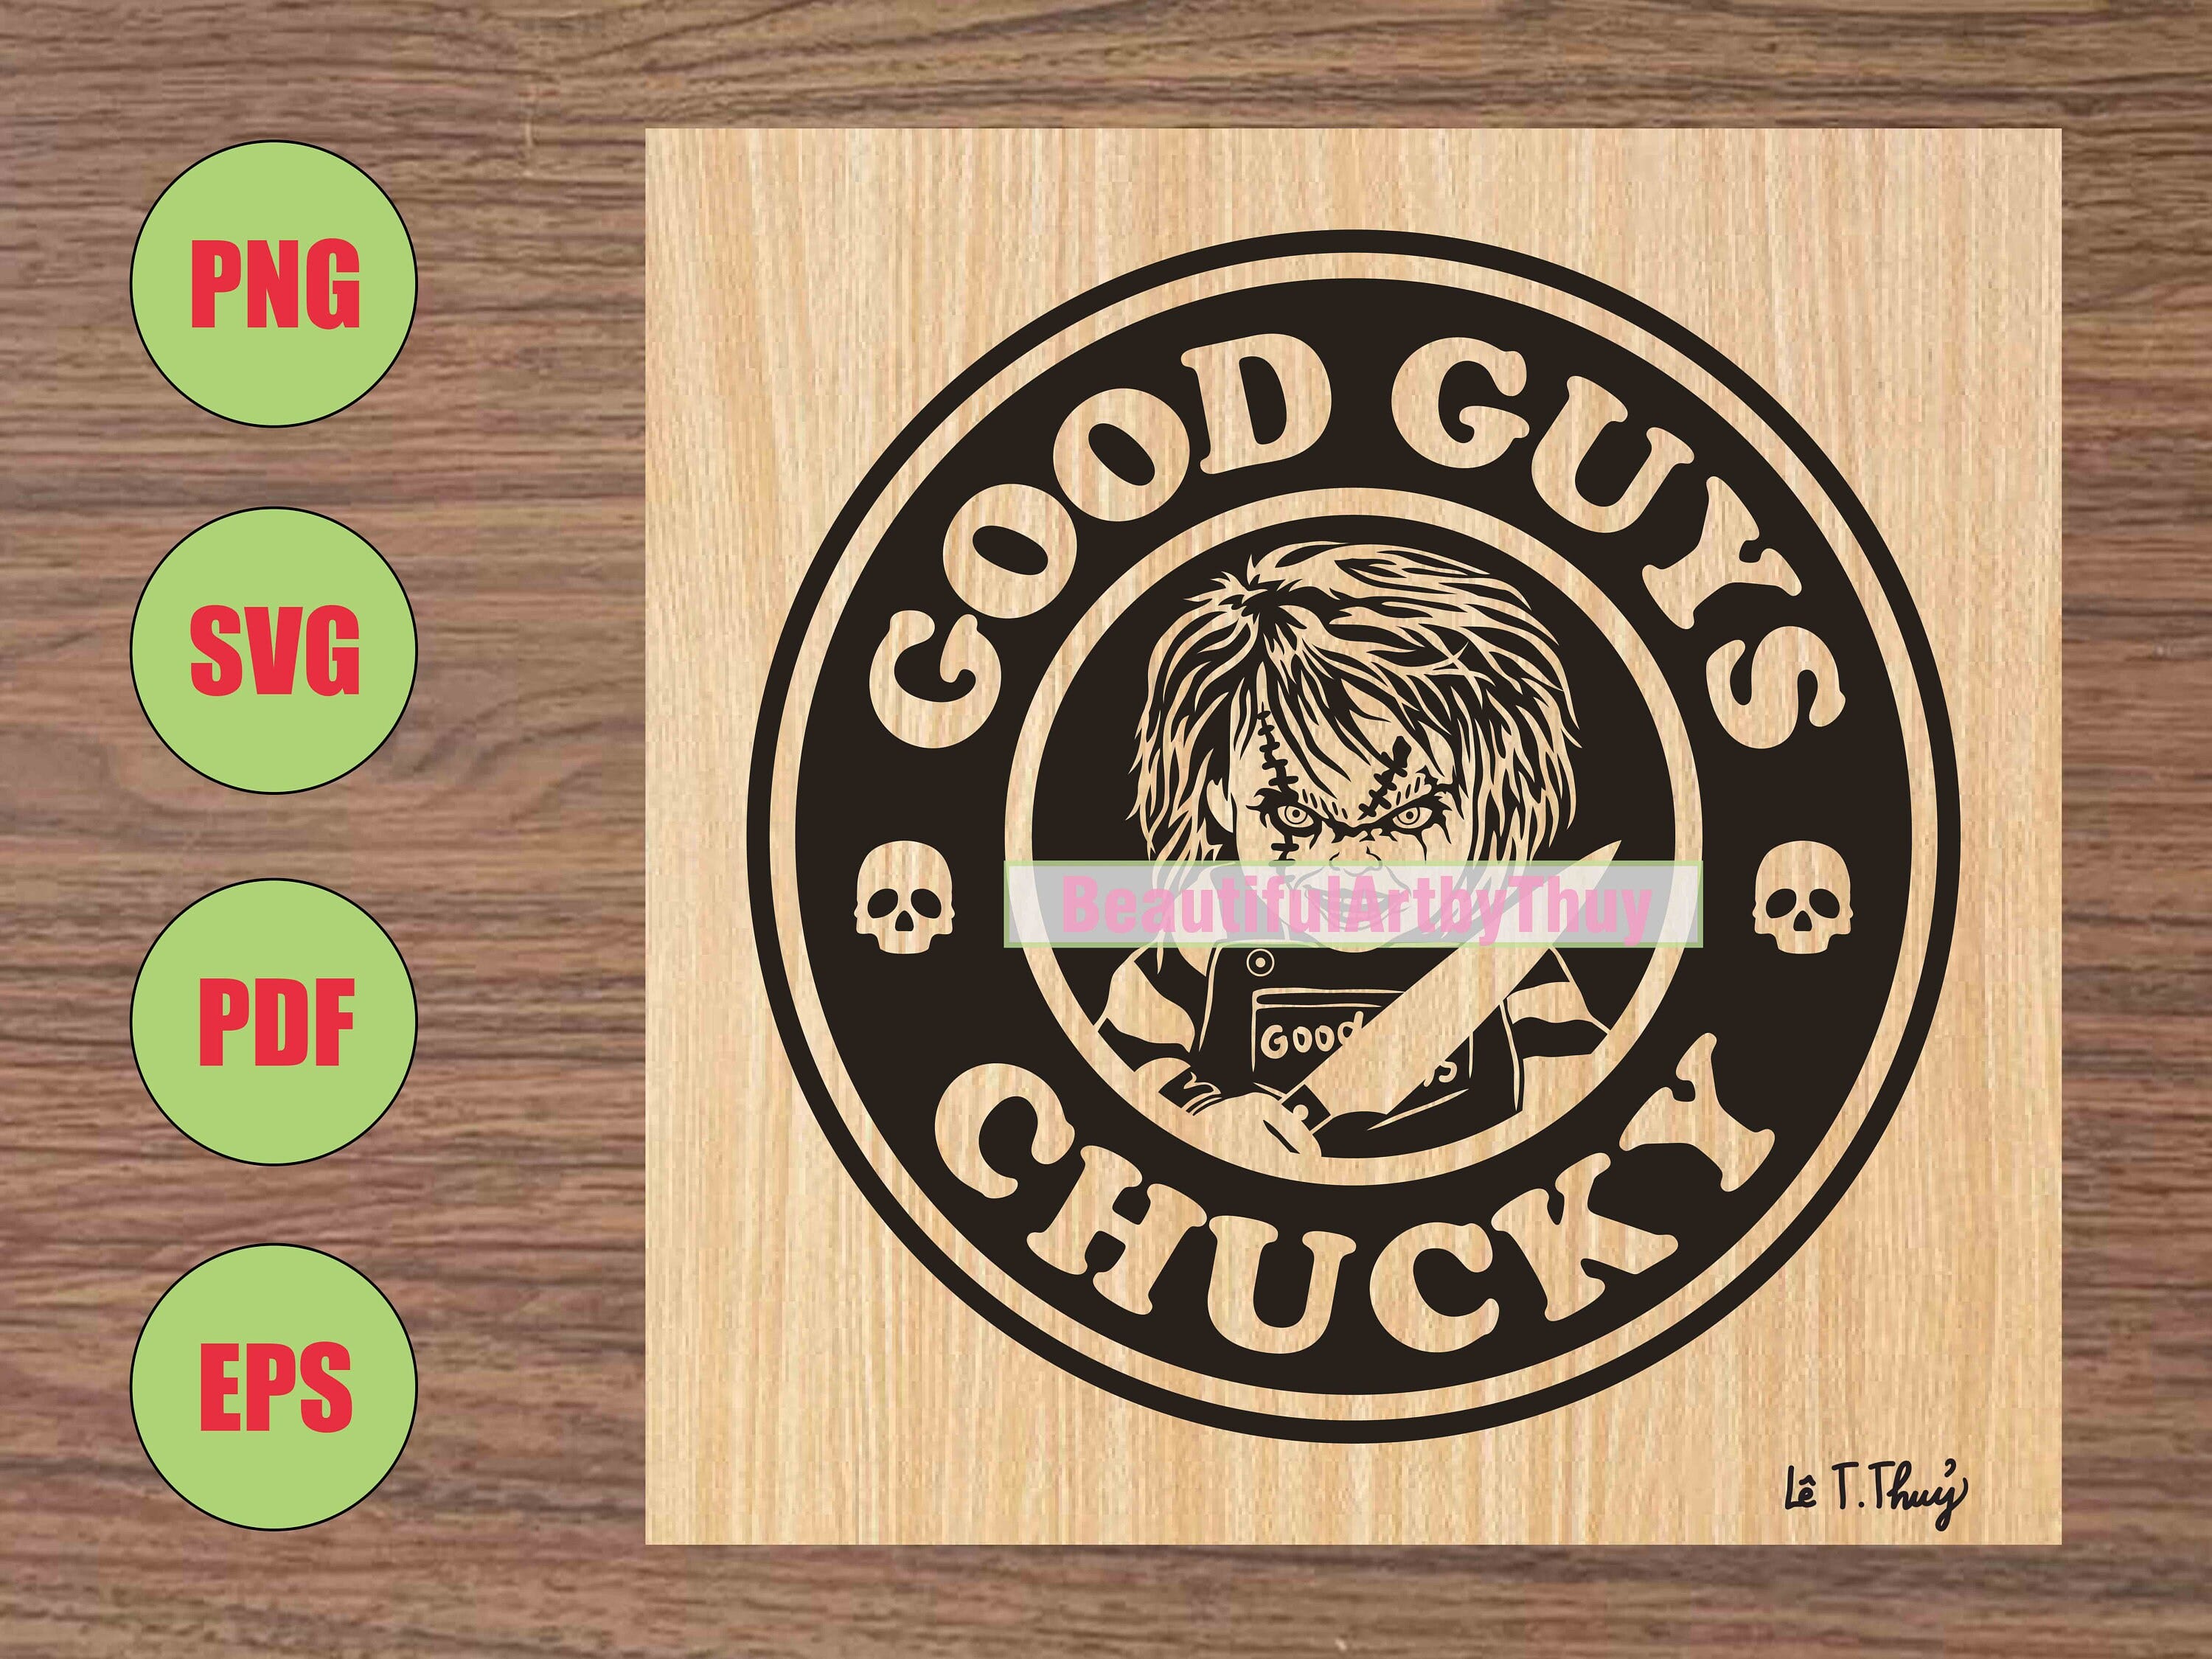 Chucky Starbucks Inspired SVG, Good Guys Chucky, Horror Movie Character SVG, Halloween Serial Killer, For Sublimation, For Cricut